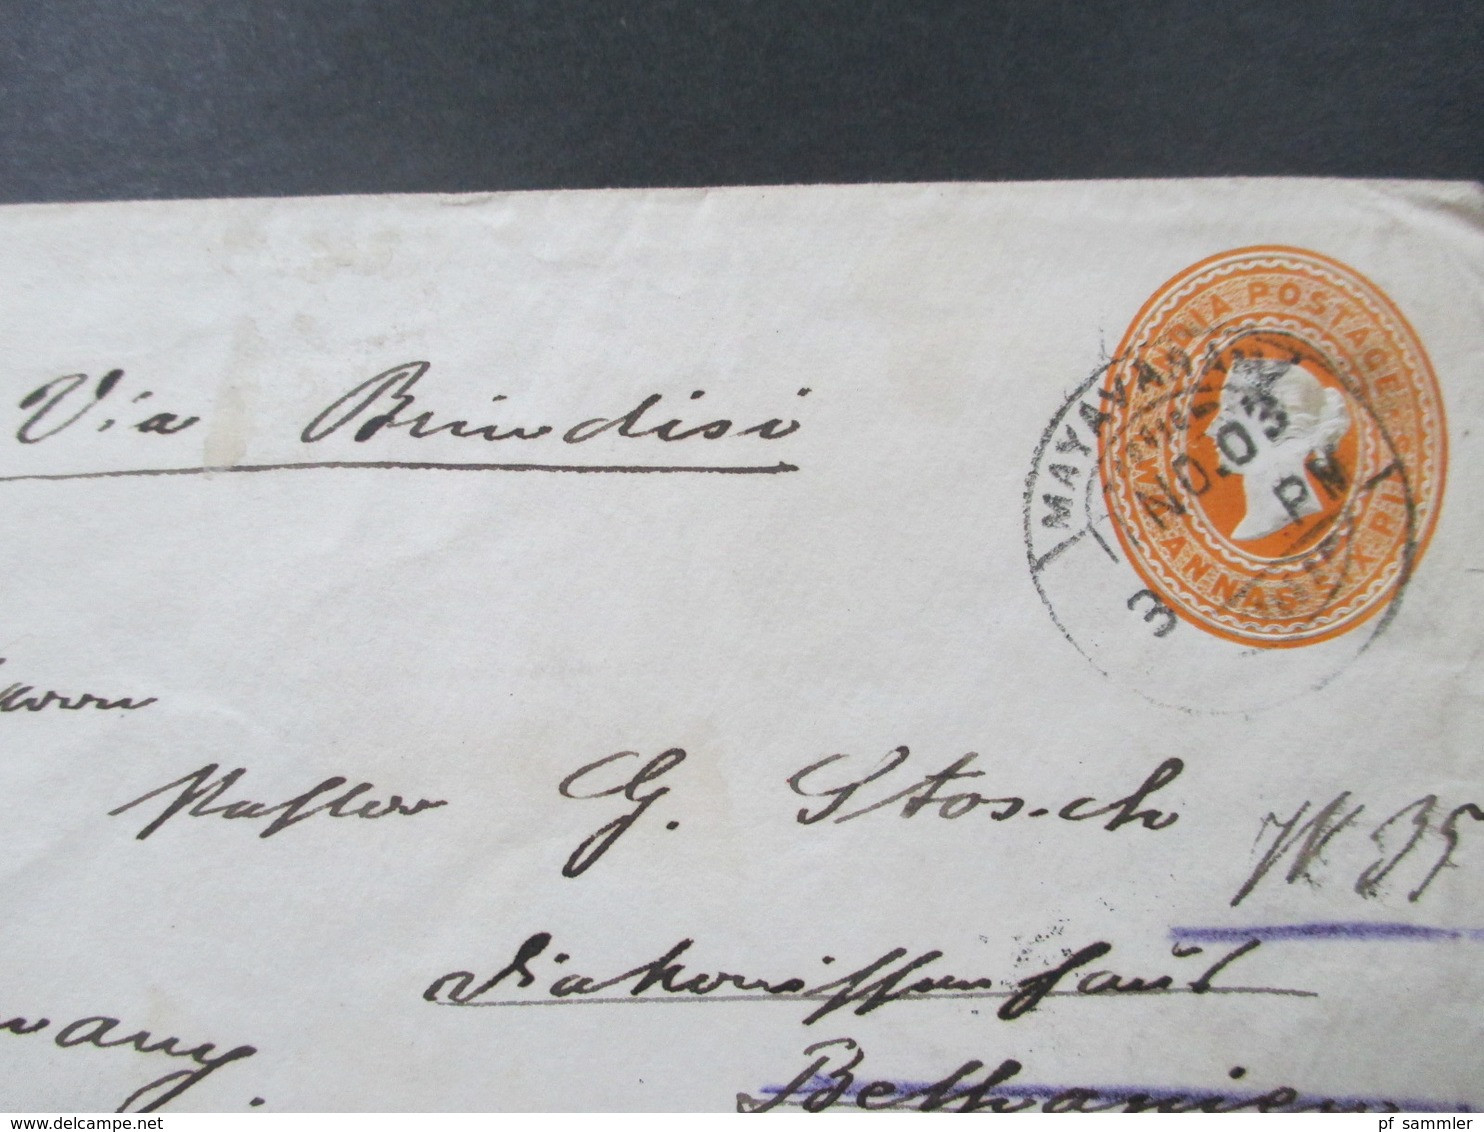 Indien 1898 GA Umschlag Mayavabam Via Brindisi Nach Berlin Sea Post Office B No. 21 - 1902-11 King Edward VII